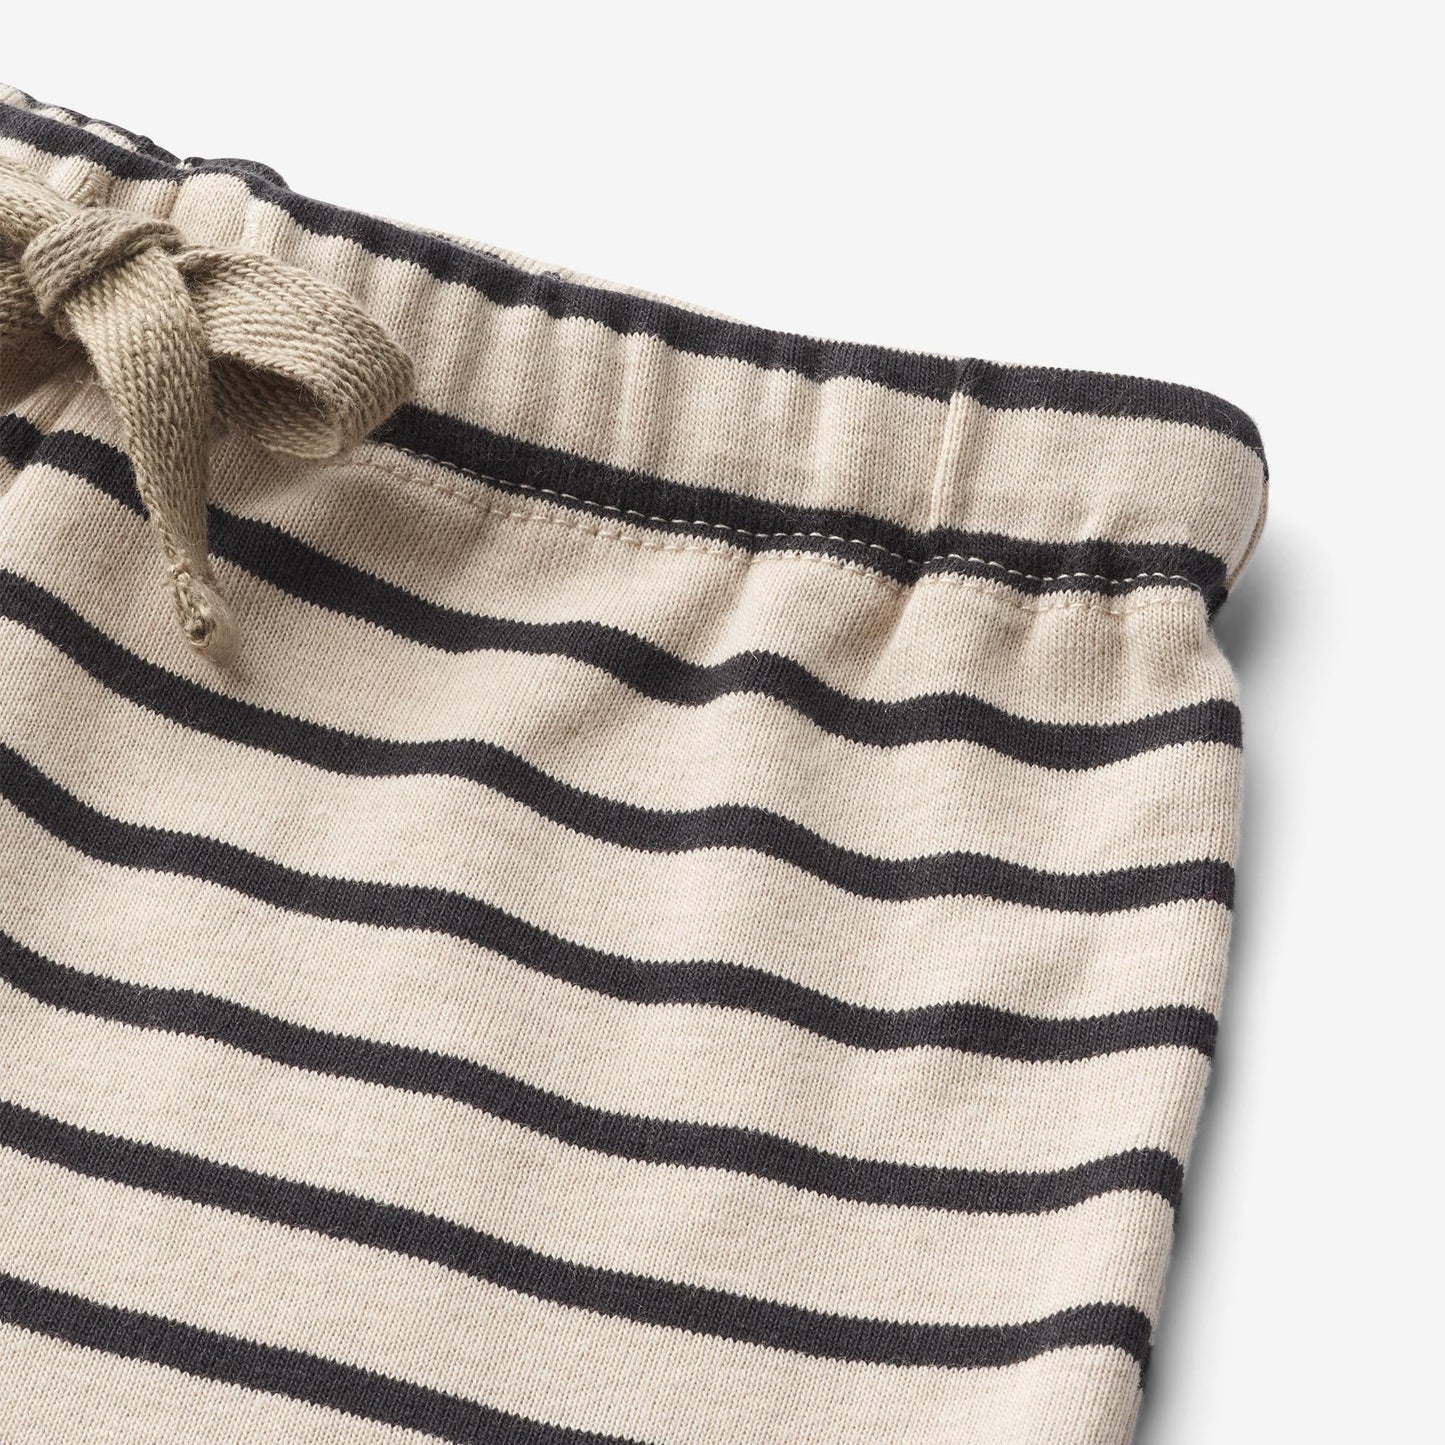 Wheat 'Vic' Jersey Baby Shorts - Navy Stripe